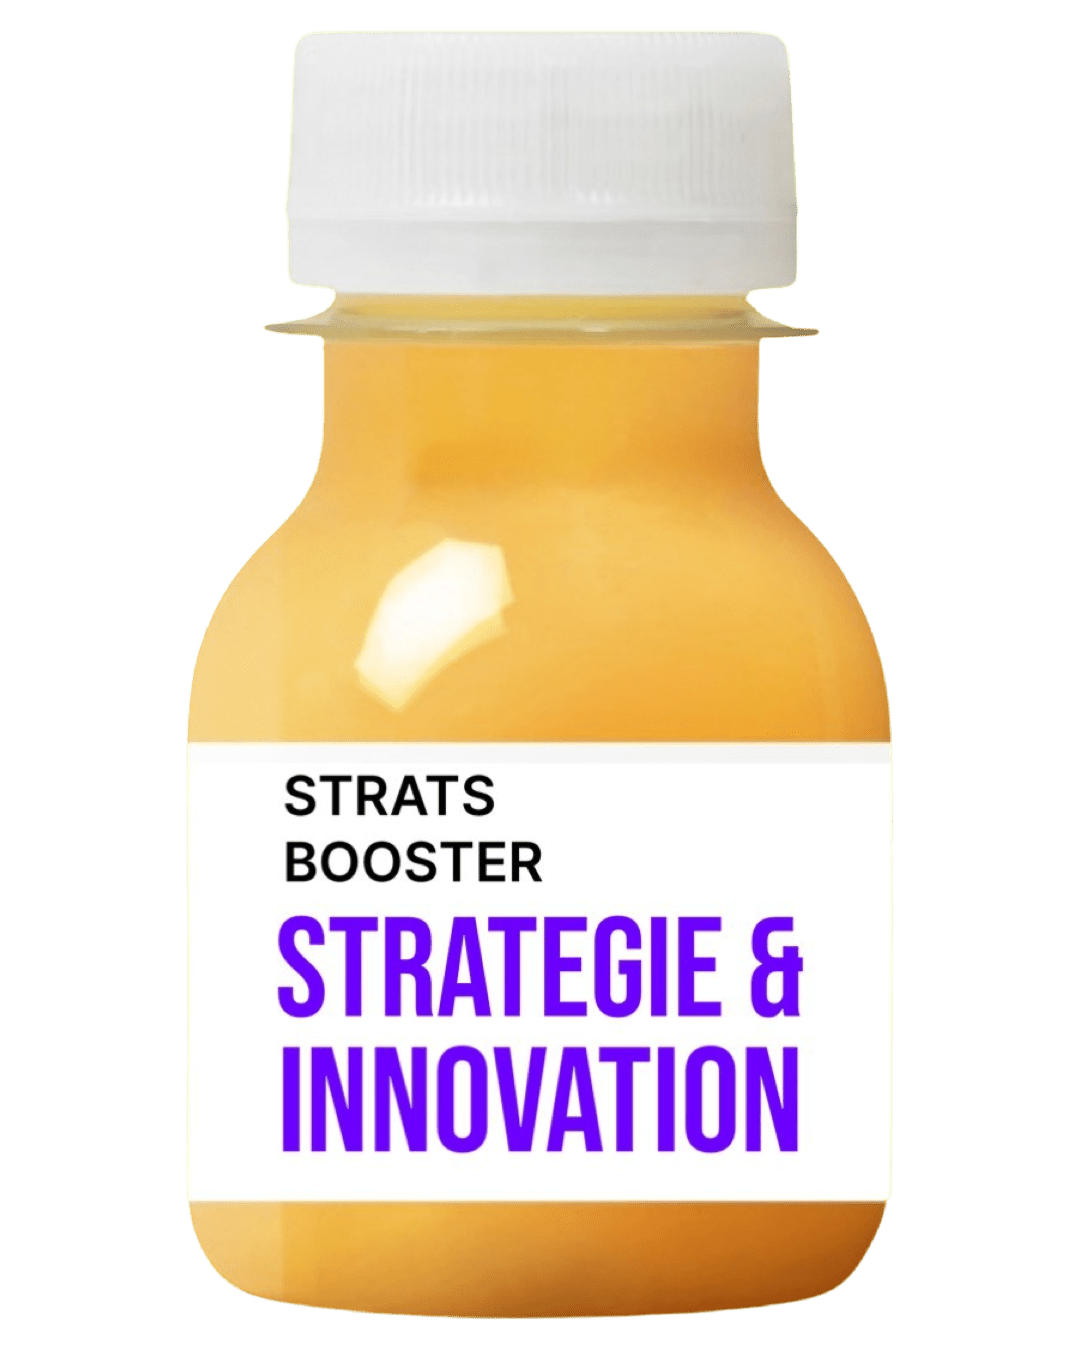 STATS Booster Innovation